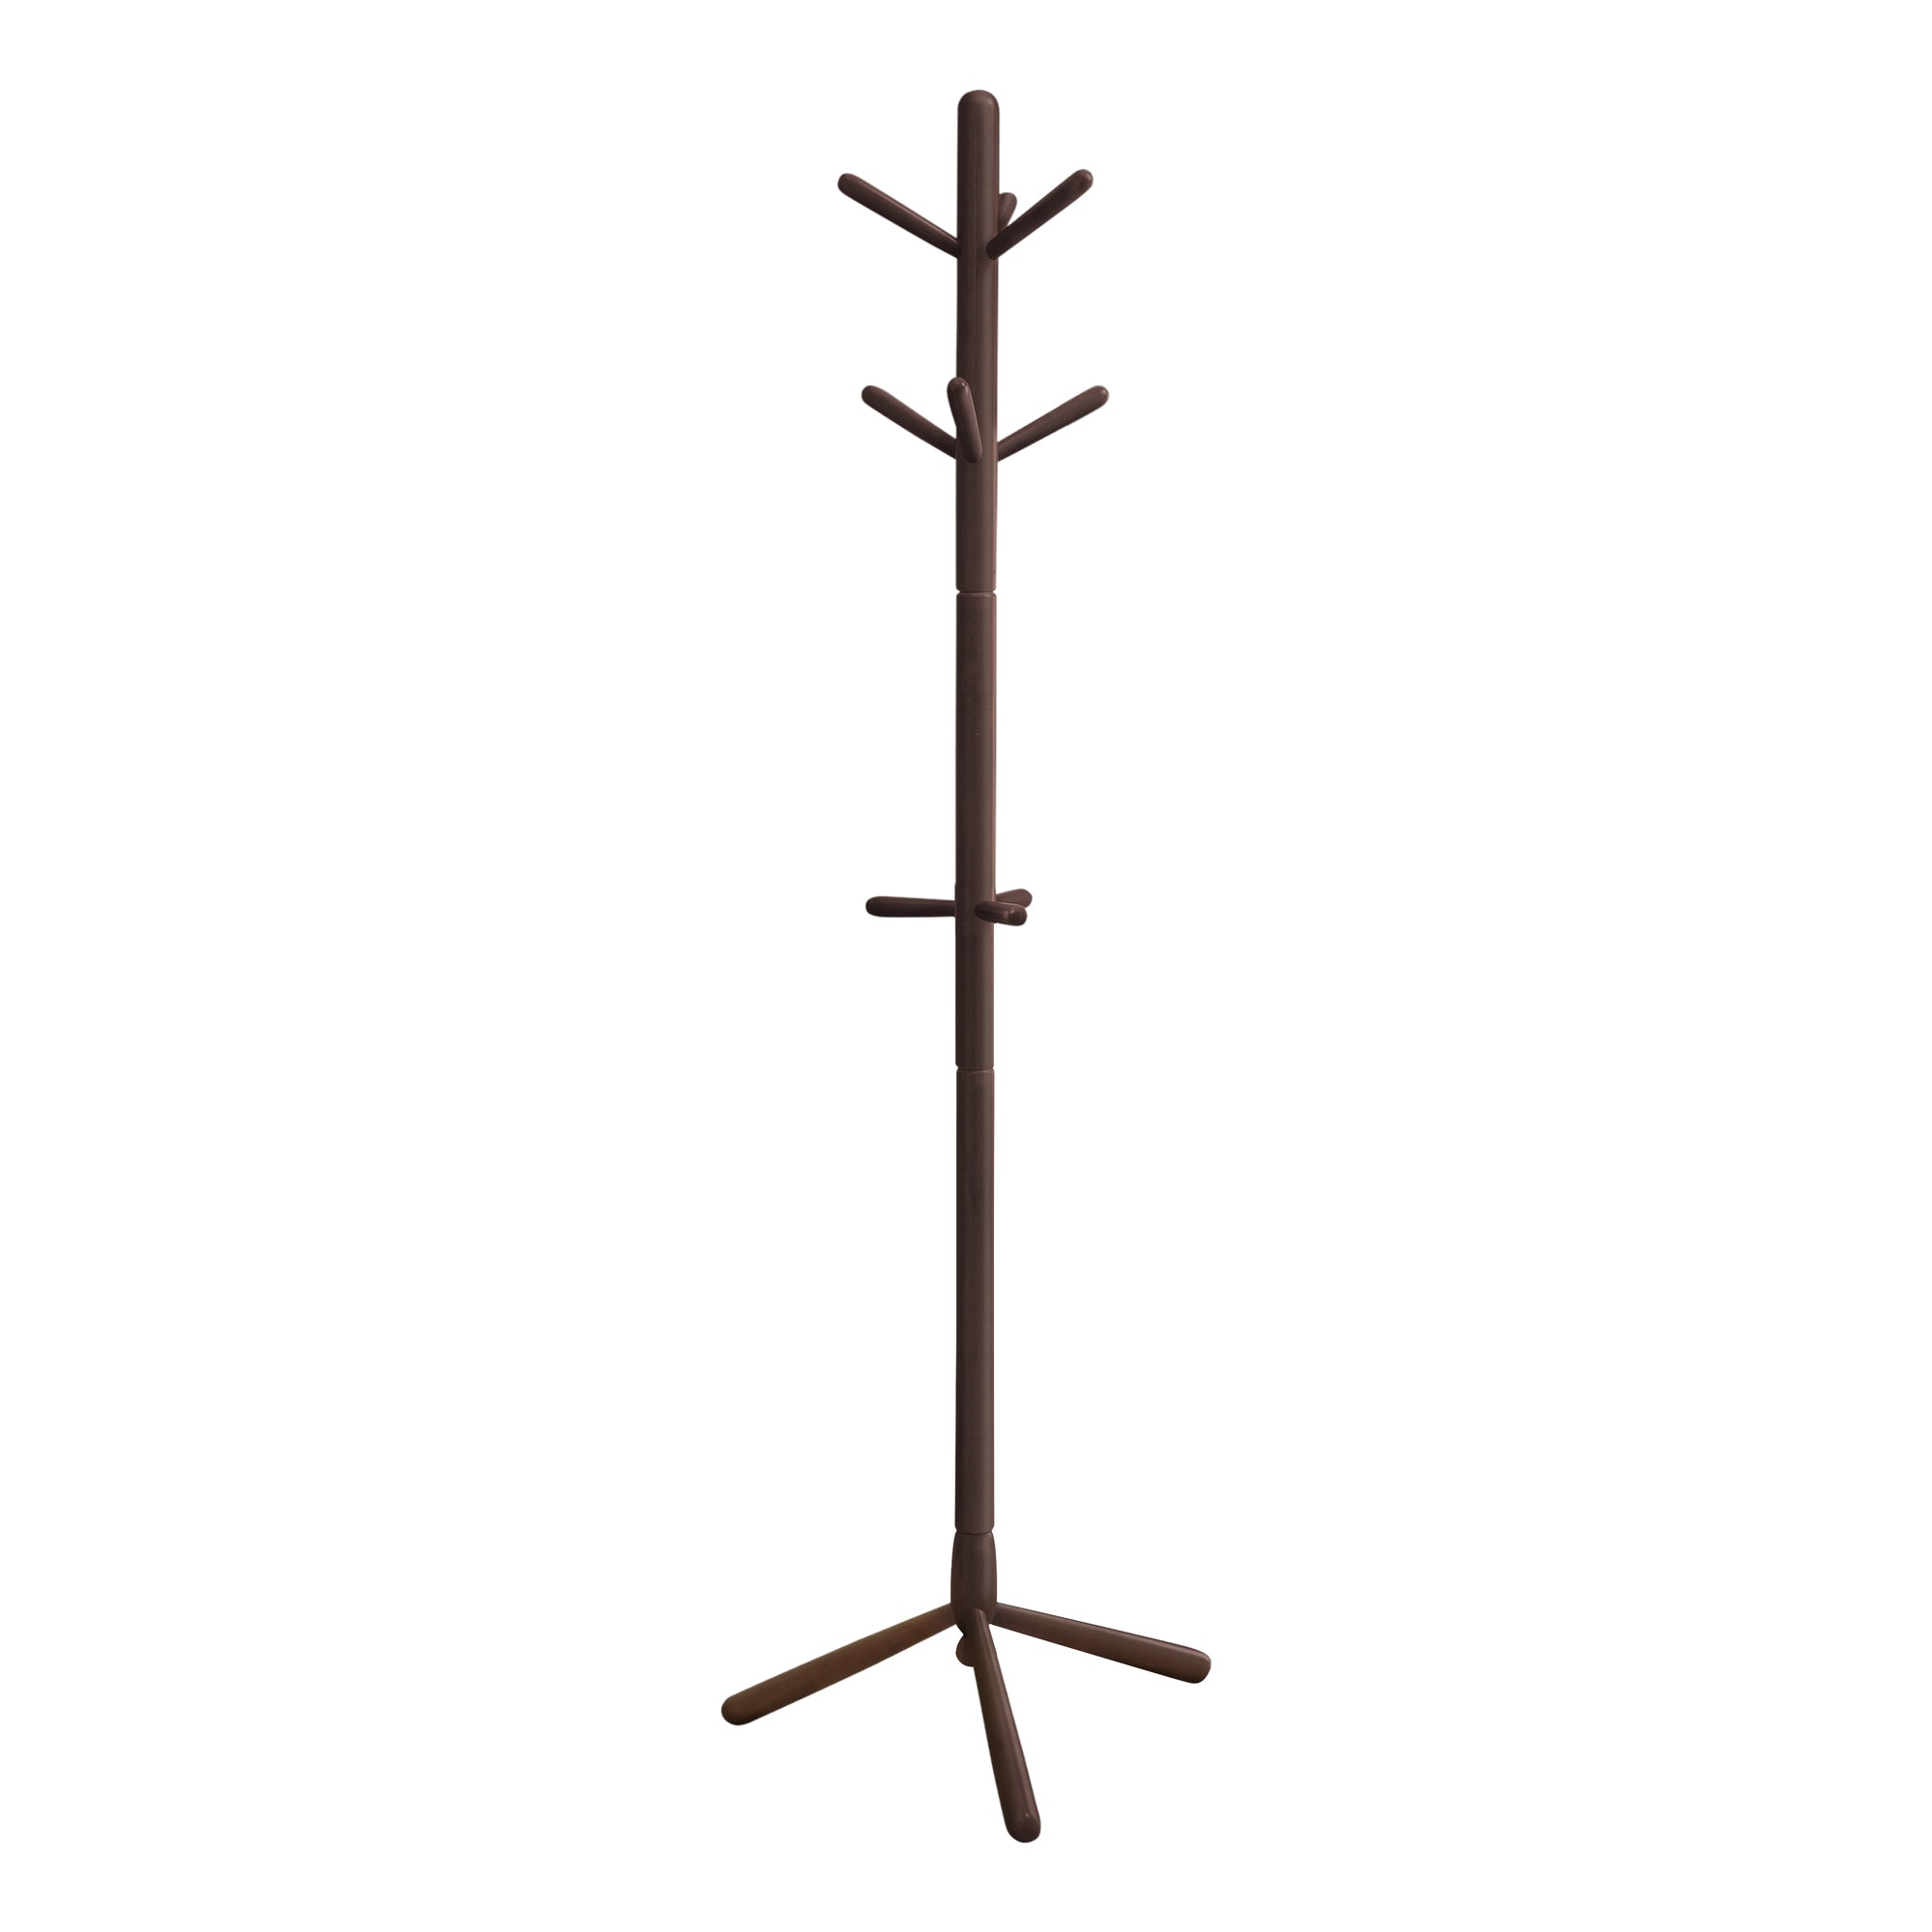 MN-472004    Coat Rack, Hall Tree, Free Standing, 9 Hooks, Entryway, 69"H, Wooden, Dark Brown, Contemporary, Modern